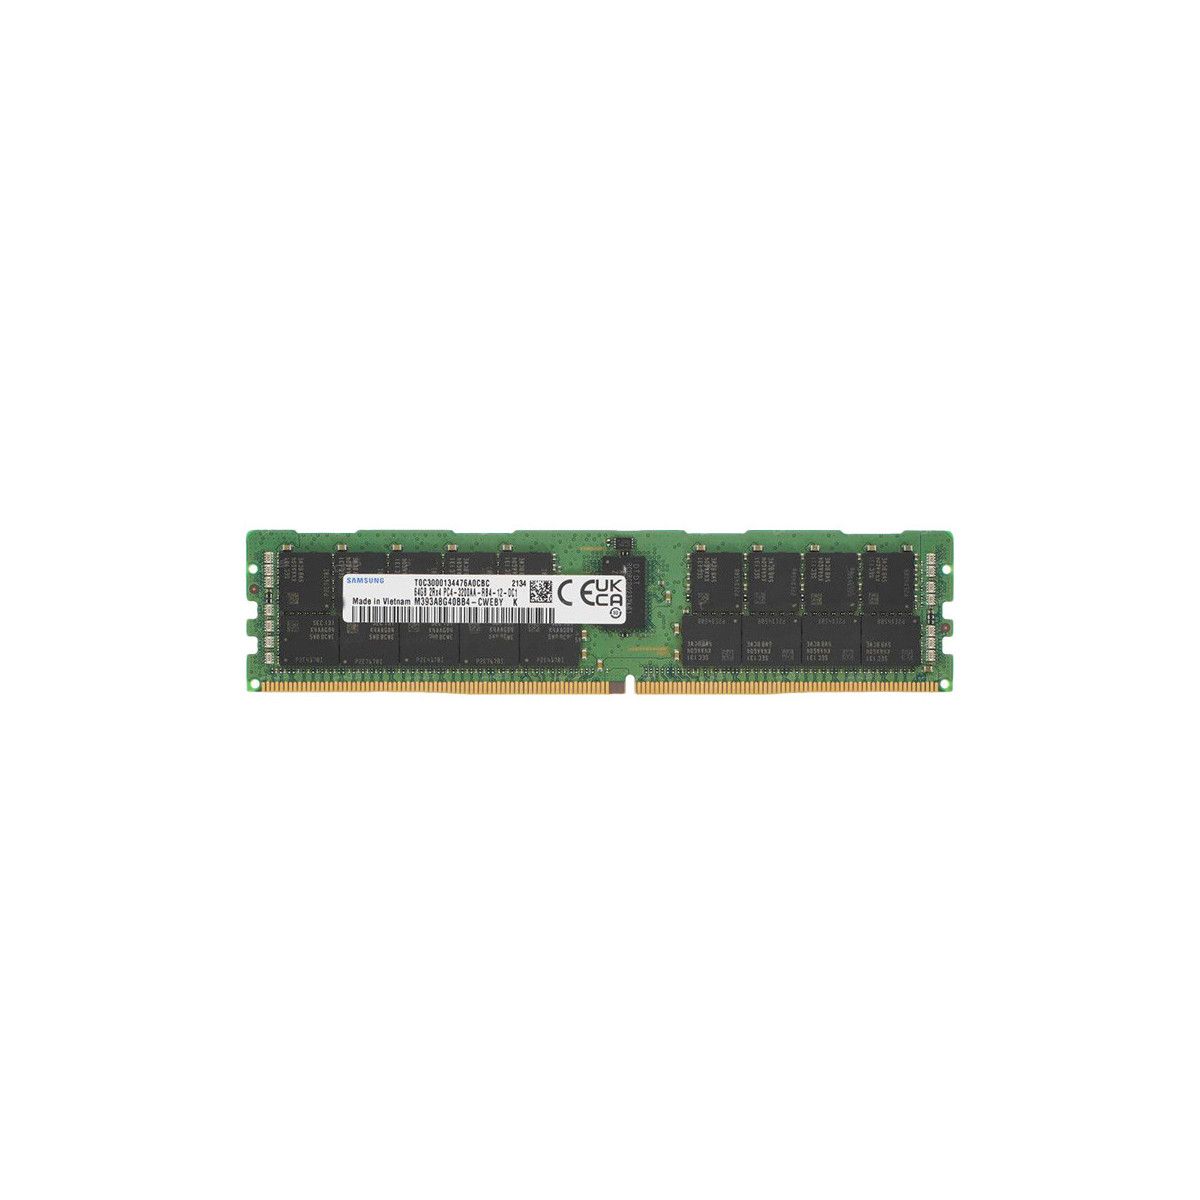 P07650-K21-MS - Memstar 1x 64GB DDR4-3200 RDIMM PC4-25600R - Mem-star Compatible OEM Memoria 1 - Memstar 